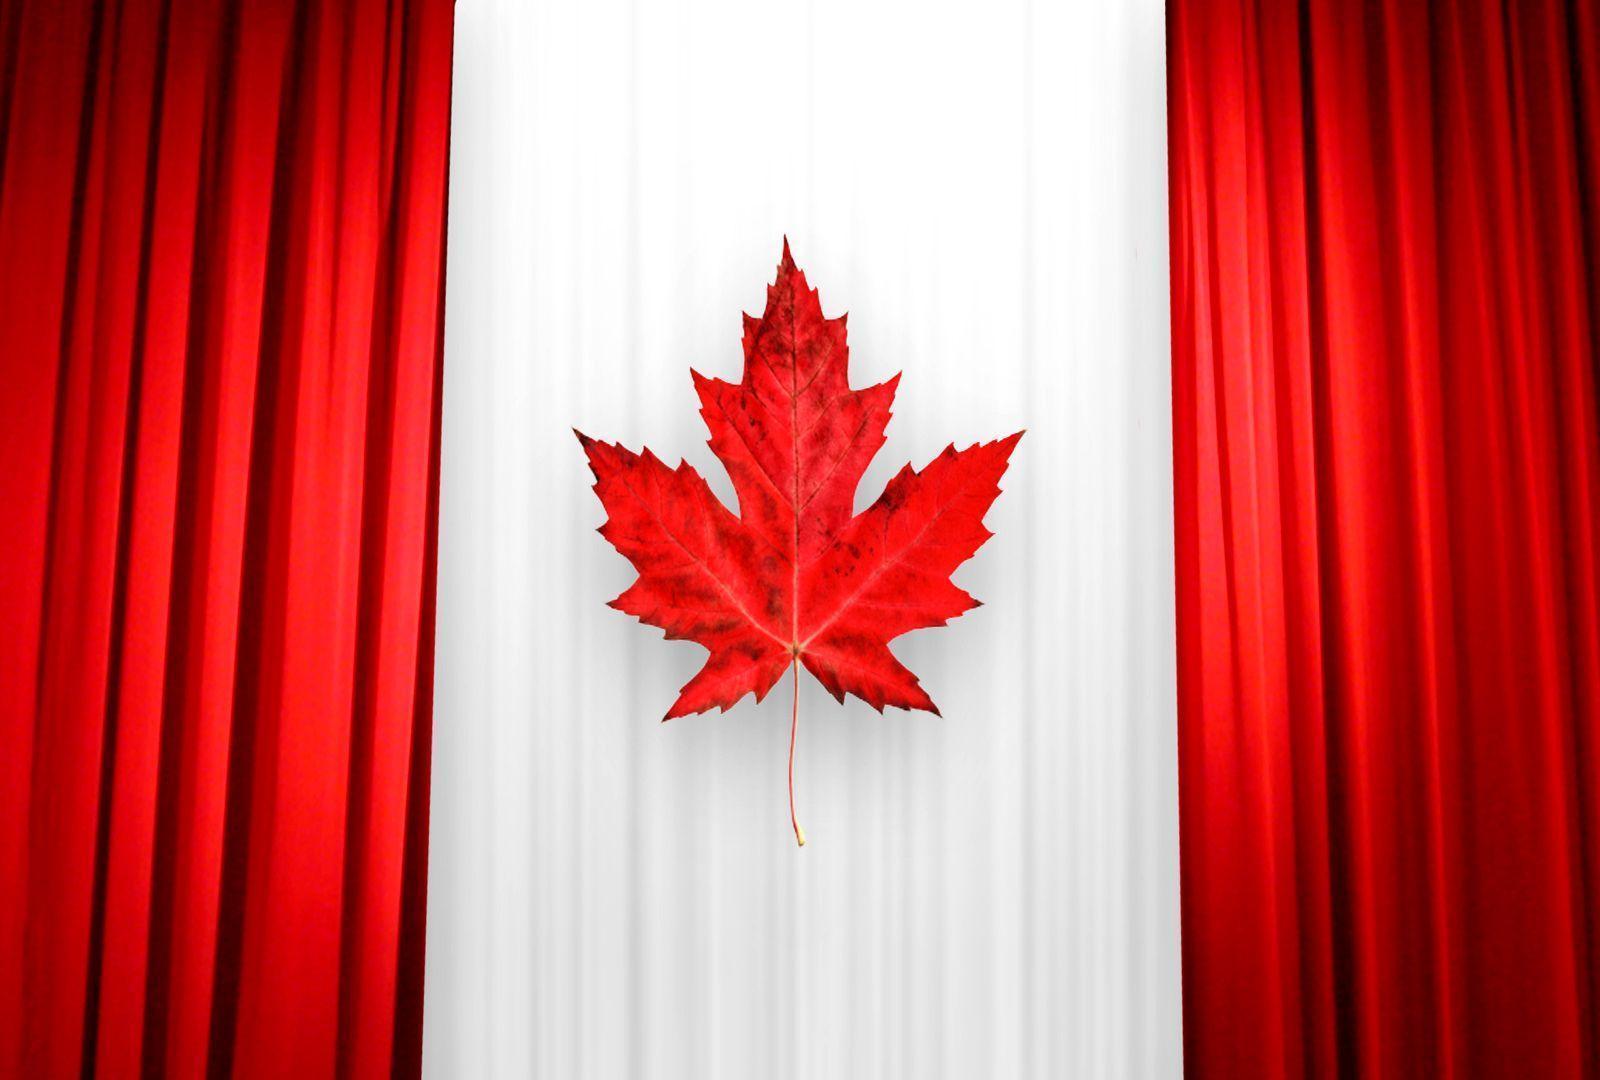 Canada Flag canadian flag image high resolution